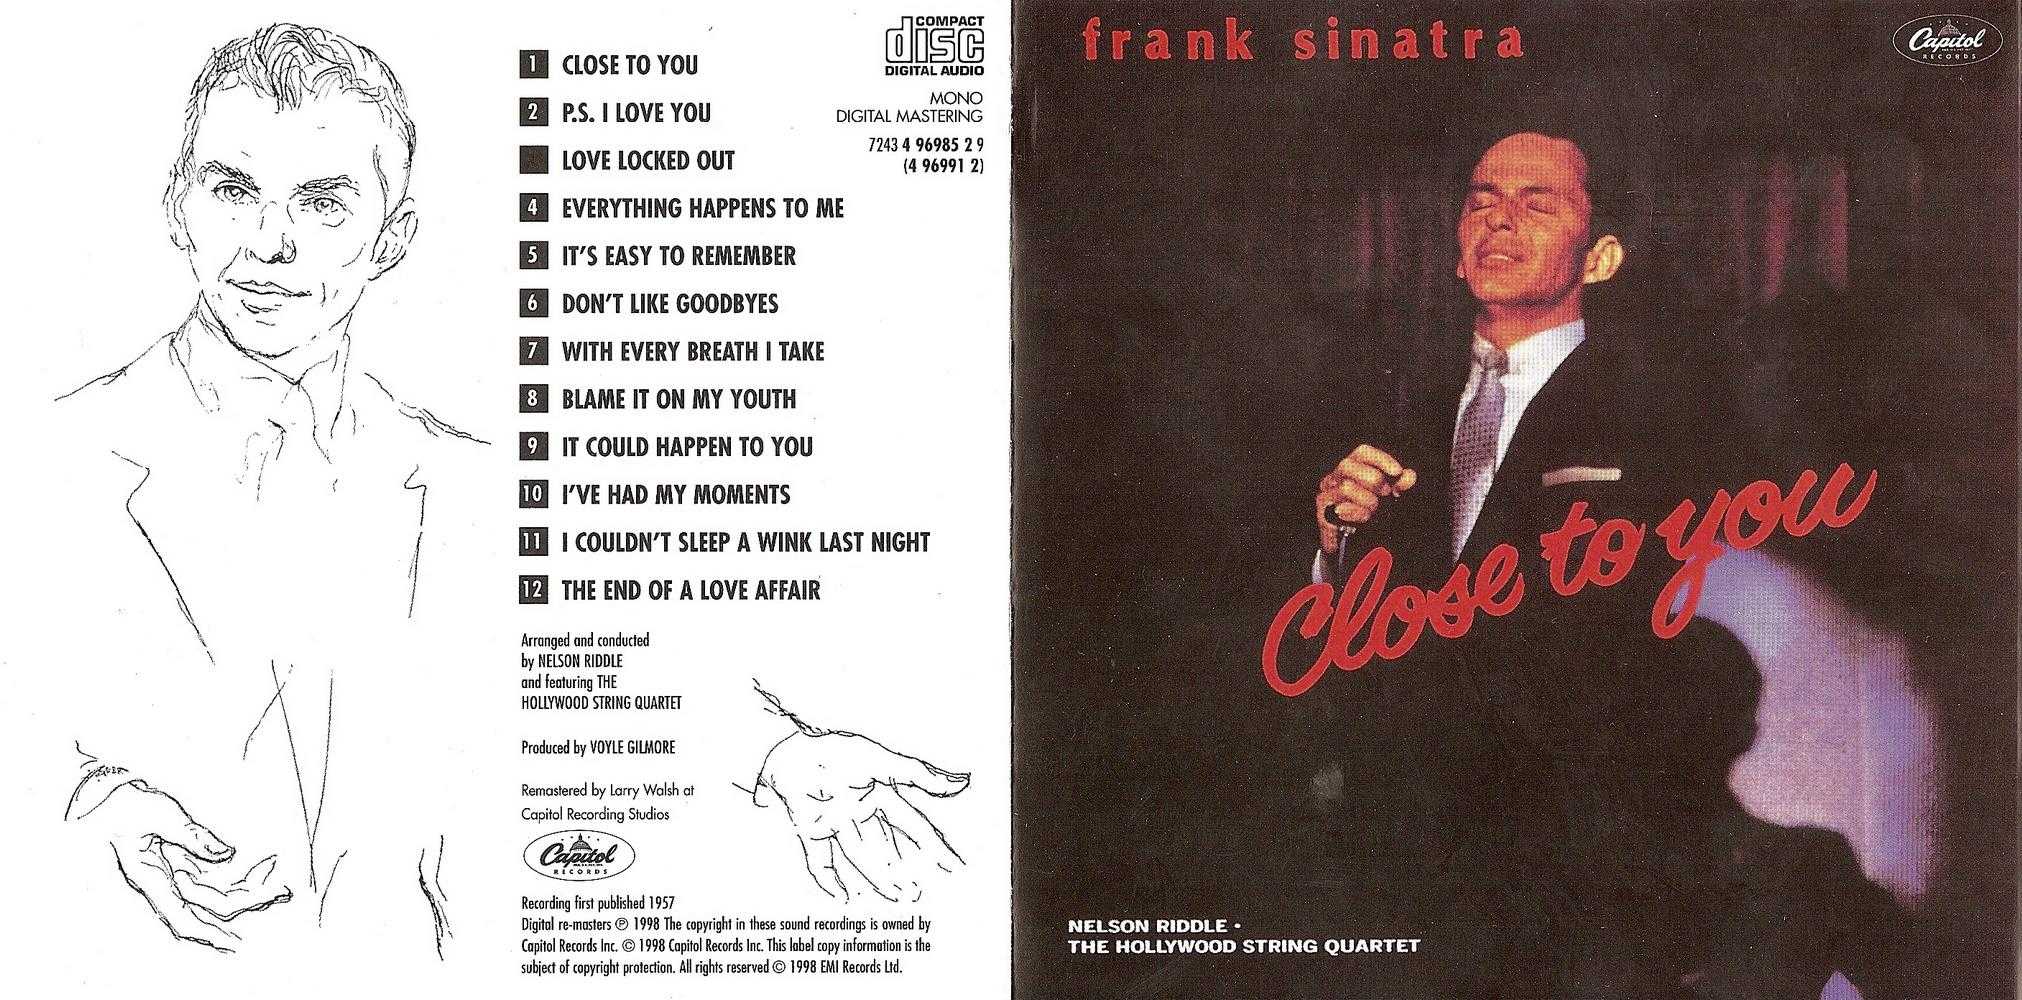 Фрэнк синатра love. Frank Sinatra "close to you". Frank Sinatra 1945. Sinatra - Sinatra 1988 обложка. Frank Sinatra close to you картинки.